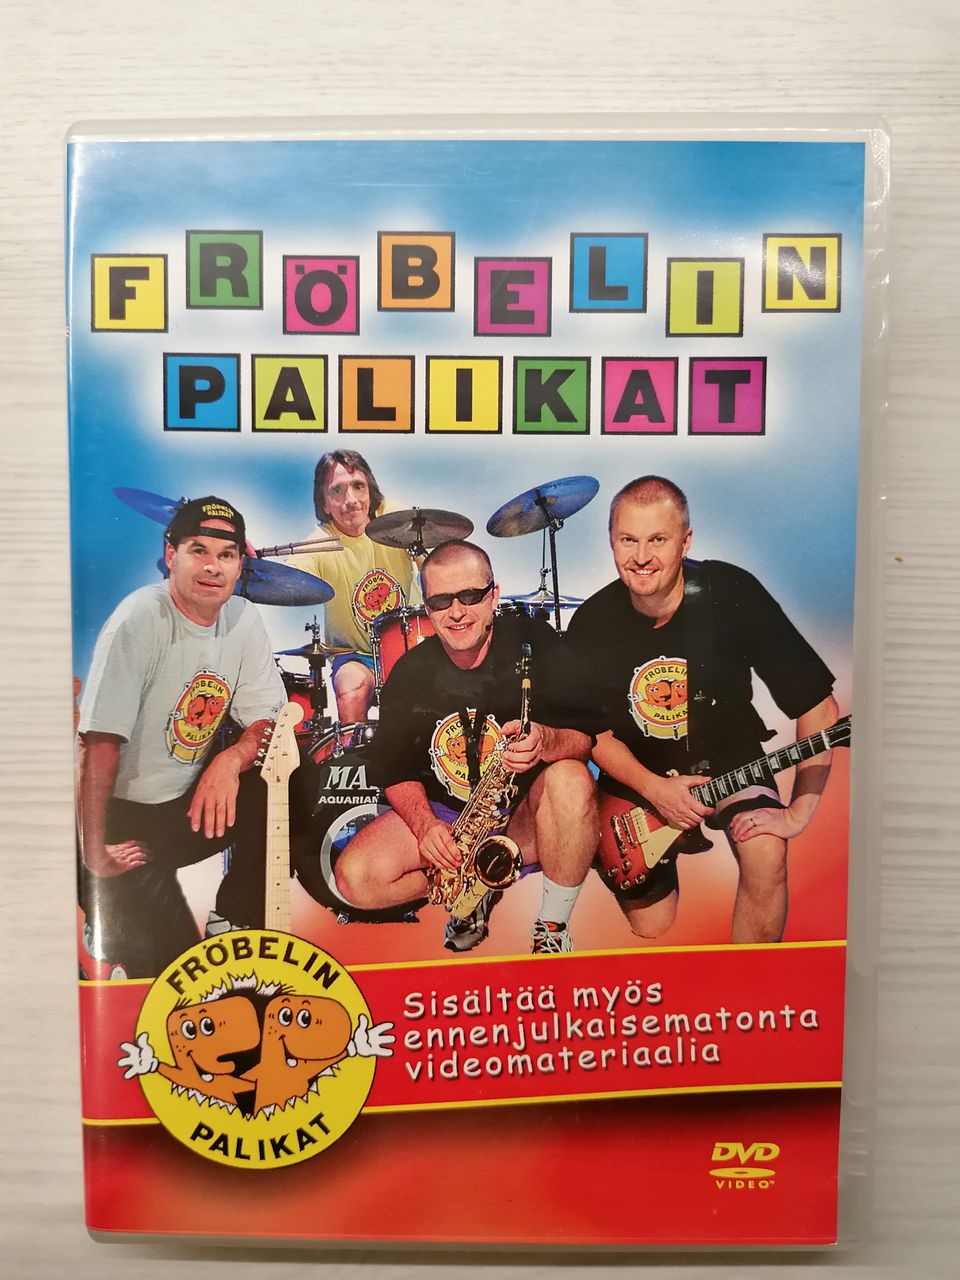 Fröbelin palikat DVD